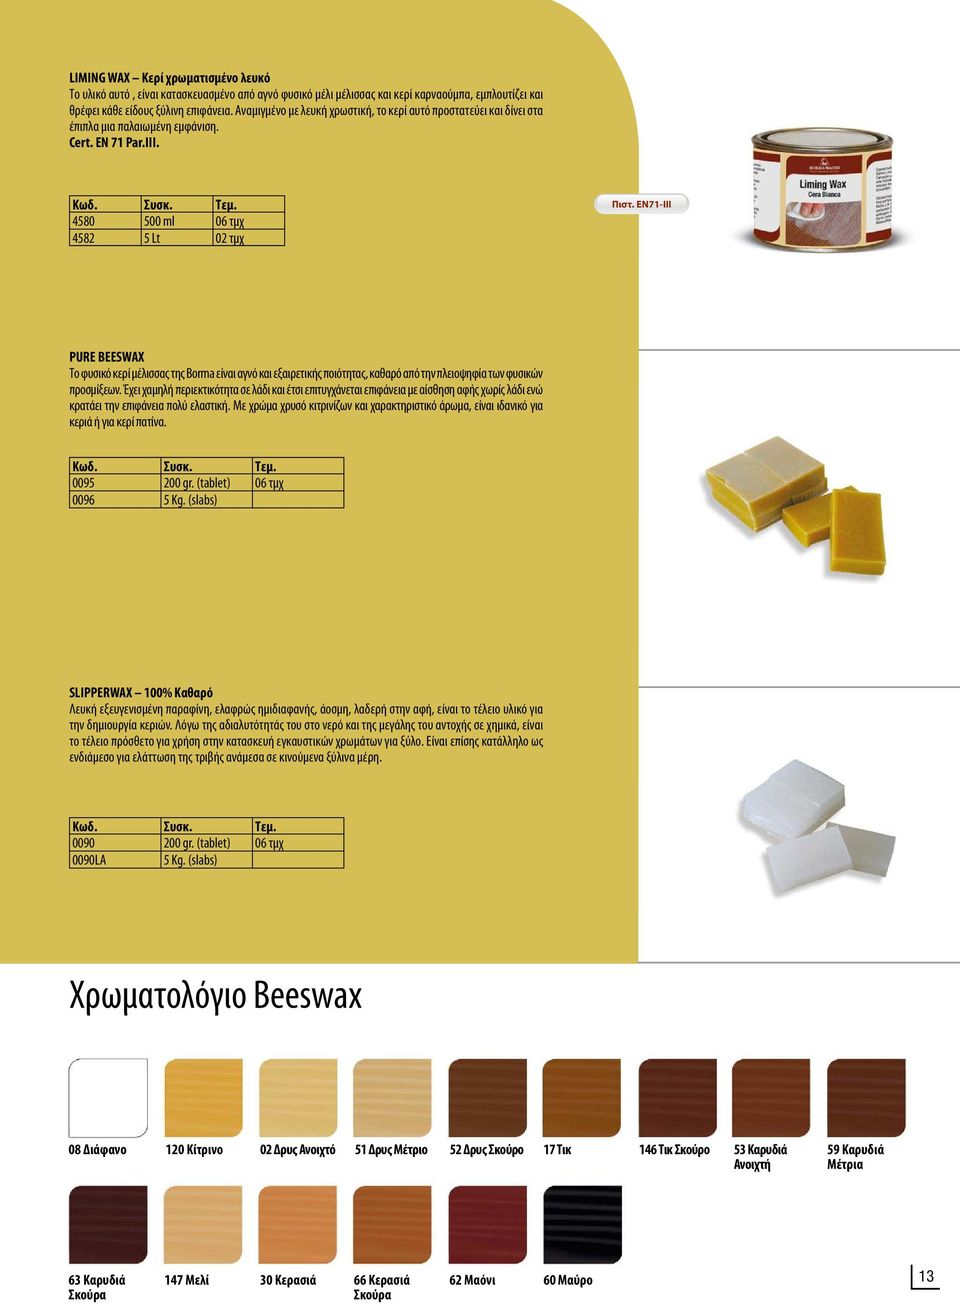 EN71-III PURE BEESWAX Το φυσικό κερί μέλισσας της Borma είναι αγνό και εξαιρετικής ποιότητας, καθαρό από την πλειοψηφία των φυσικών προσμίξεων.